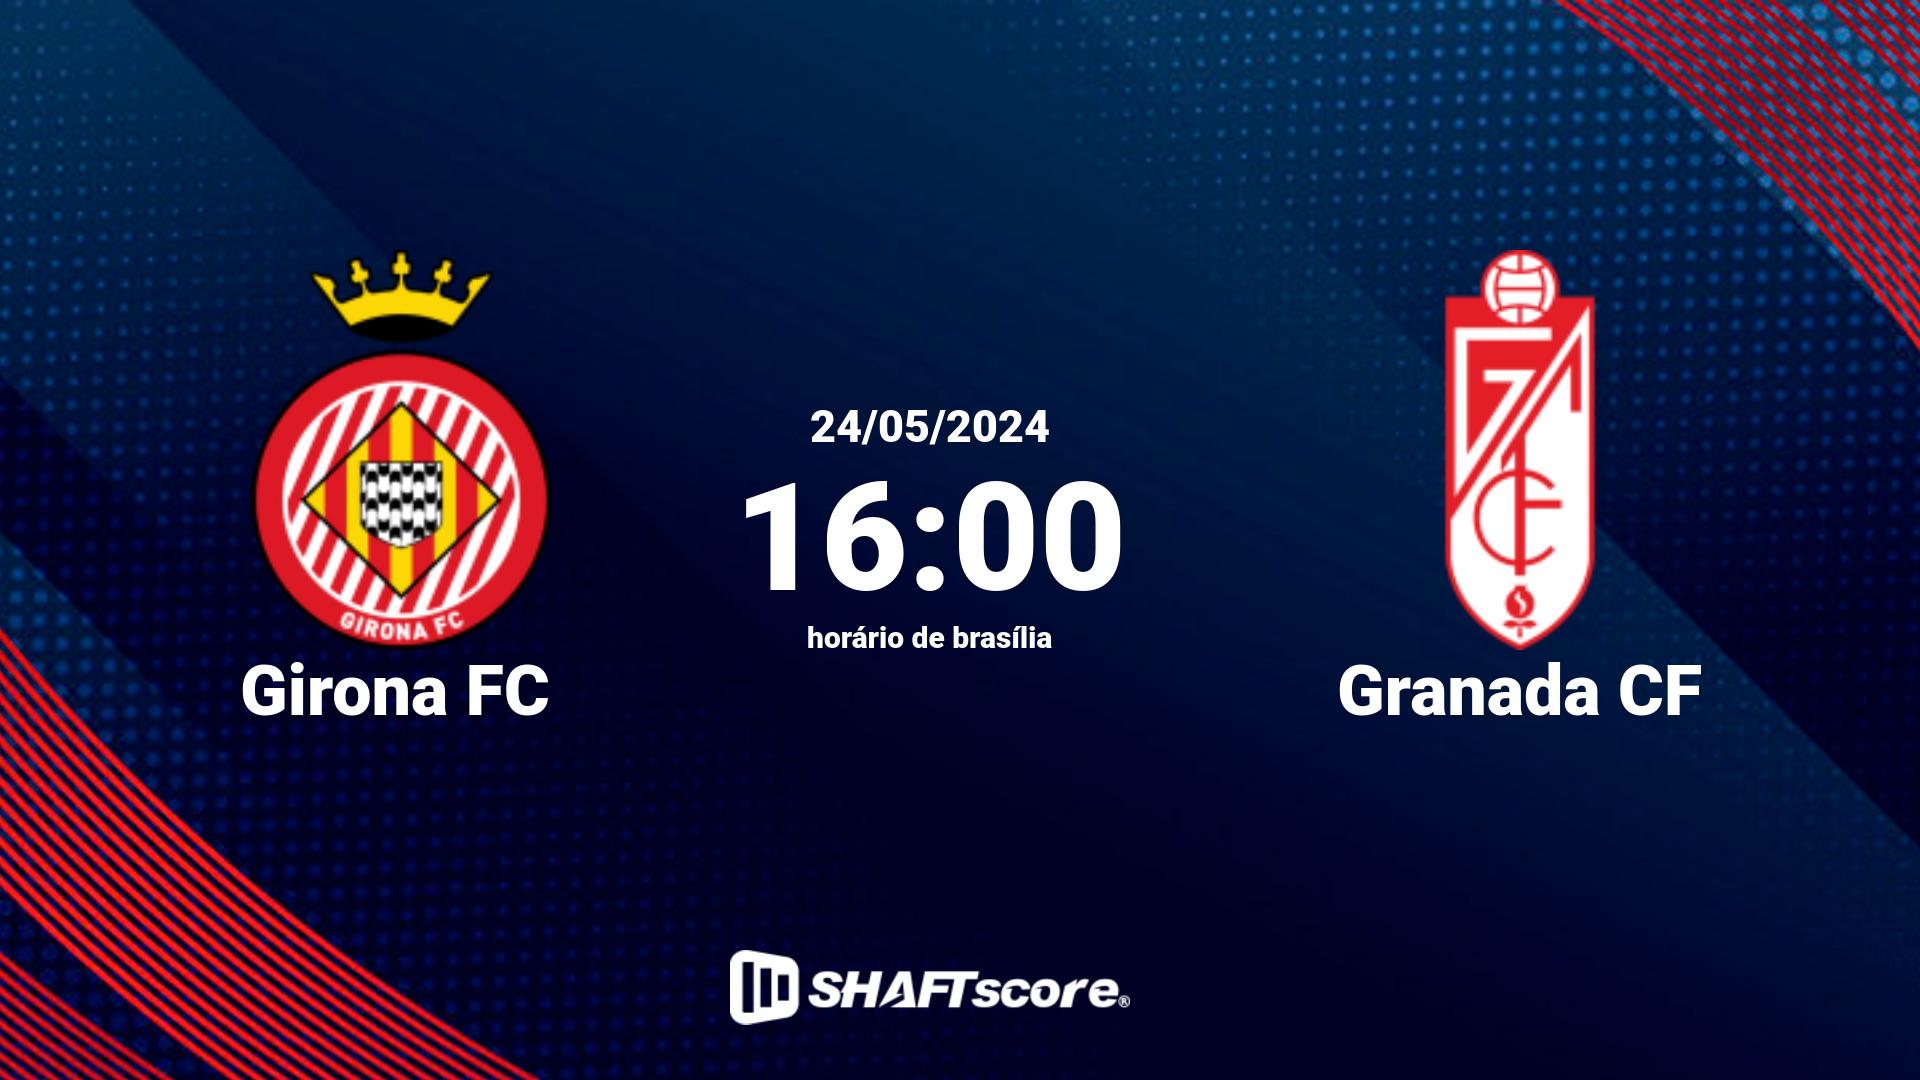 Estatísticas do jogo Girona FC vs Granada CF 24.05 16:00